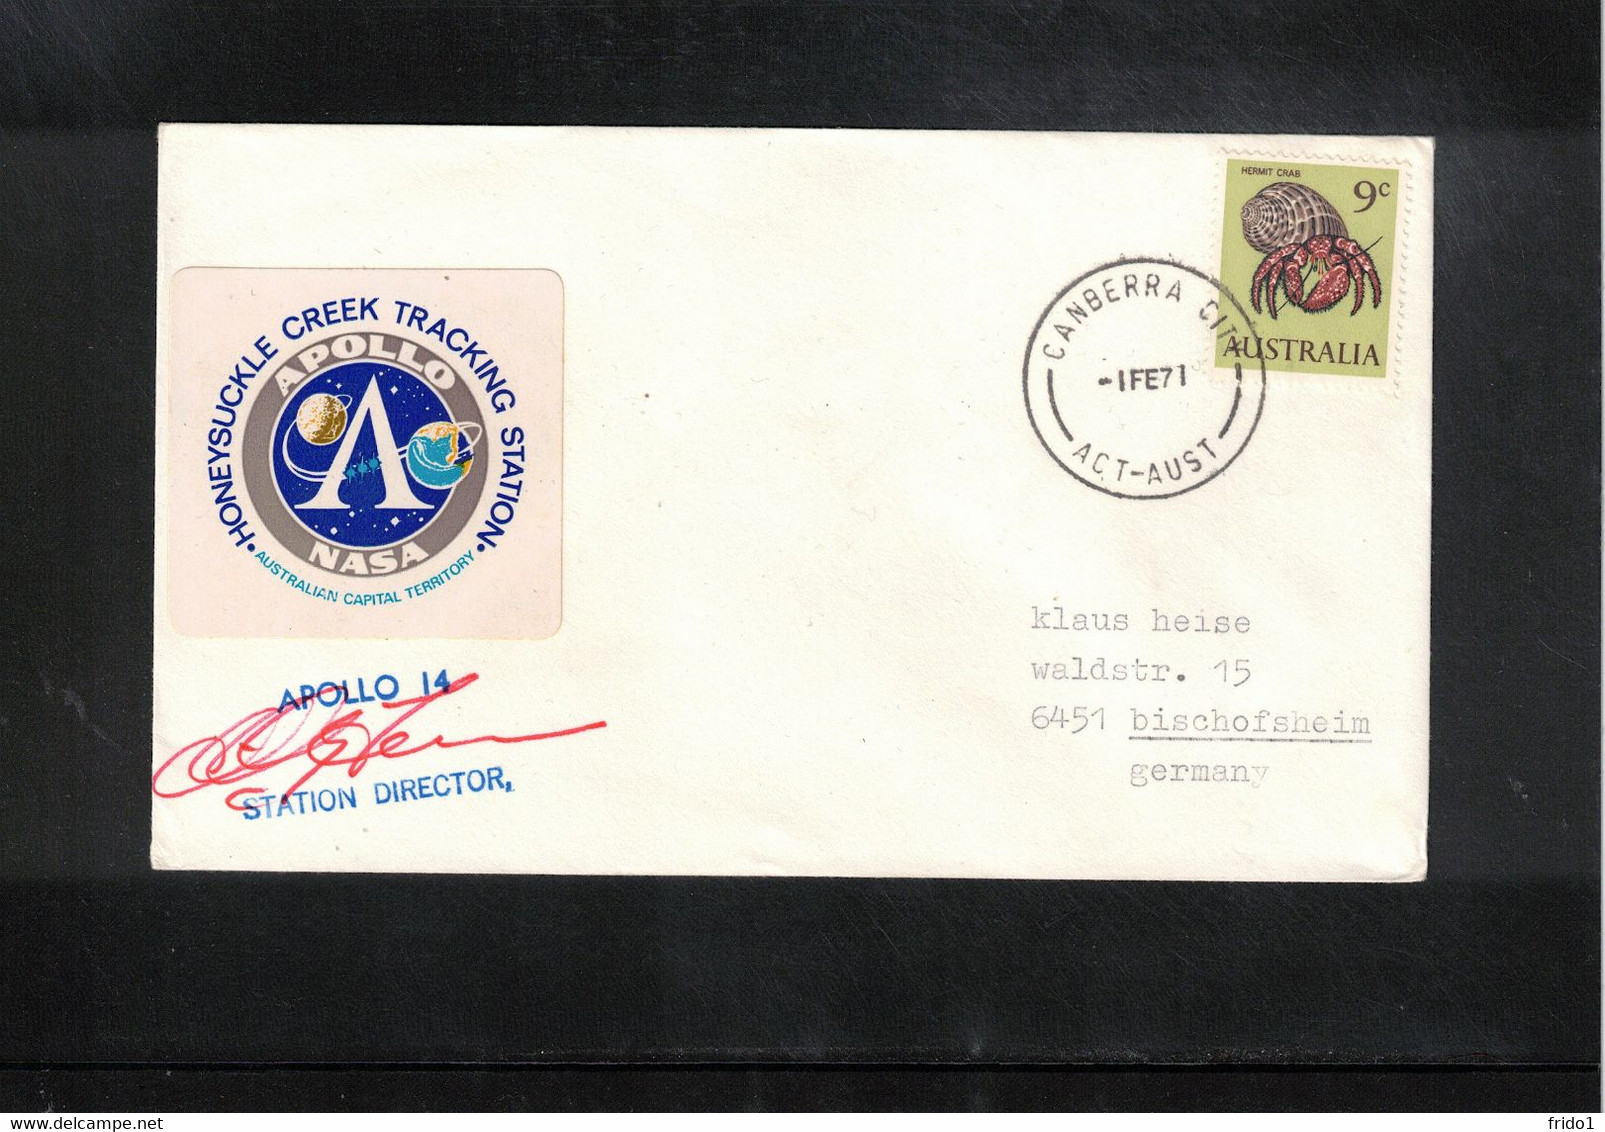 Australia 1971 Space / Raumfahrt Apollo 14 Honeysuckle Creek Tracking Station Interesting Signed Letter - Oceania